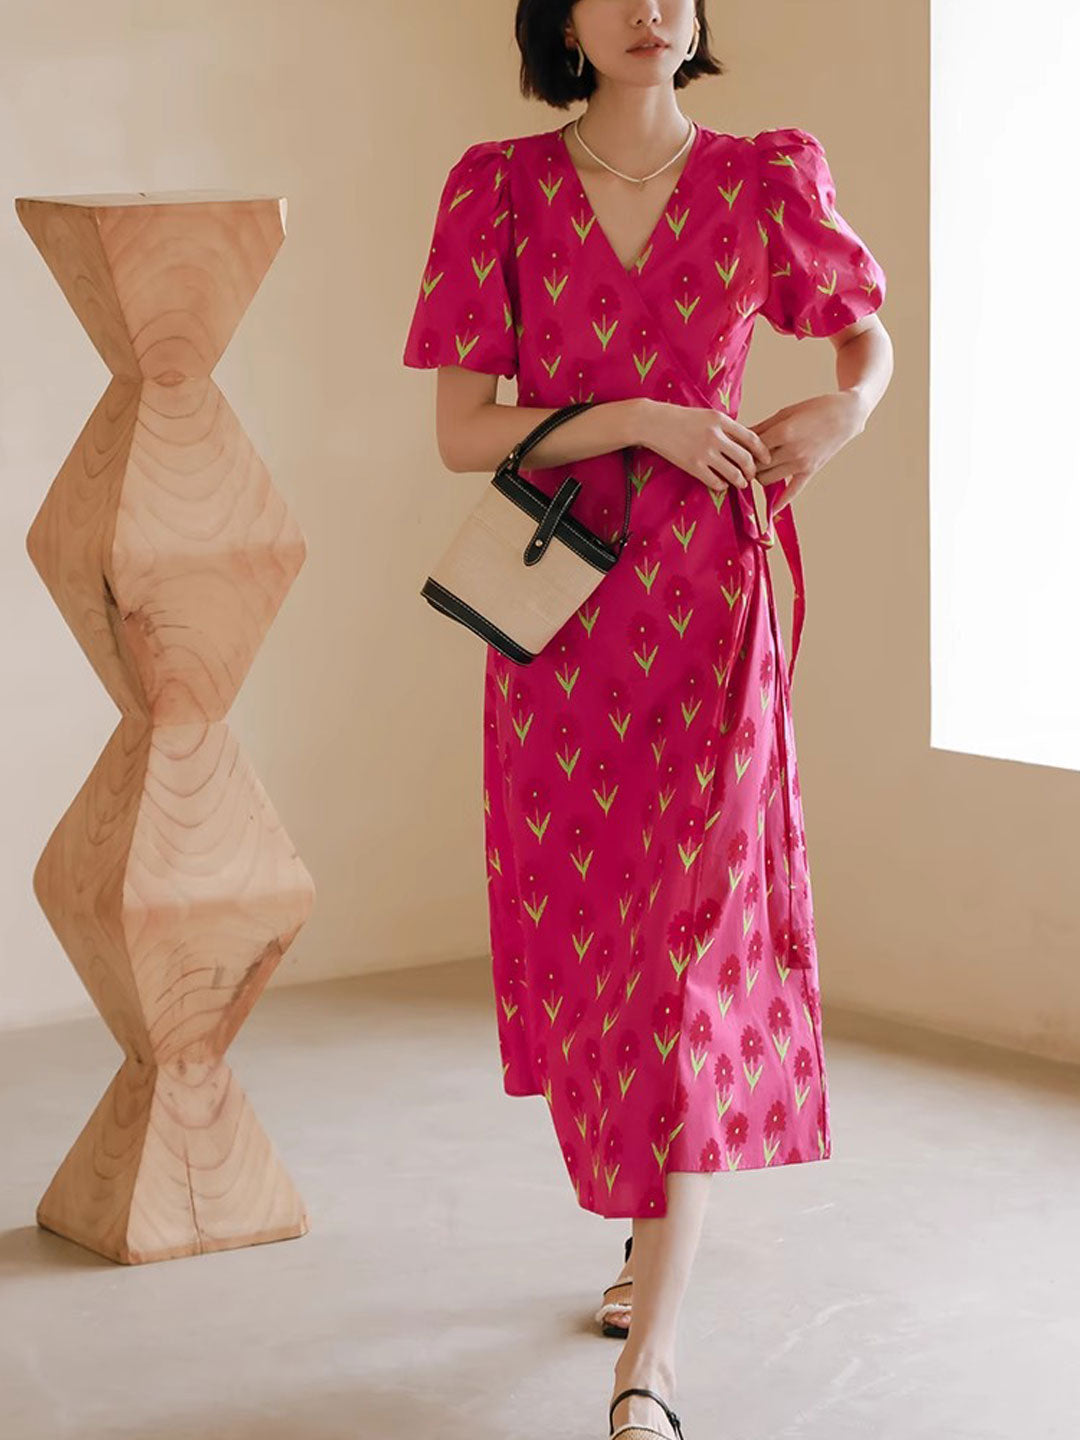 Hannah Retro V-Neck Floral Printed Dress